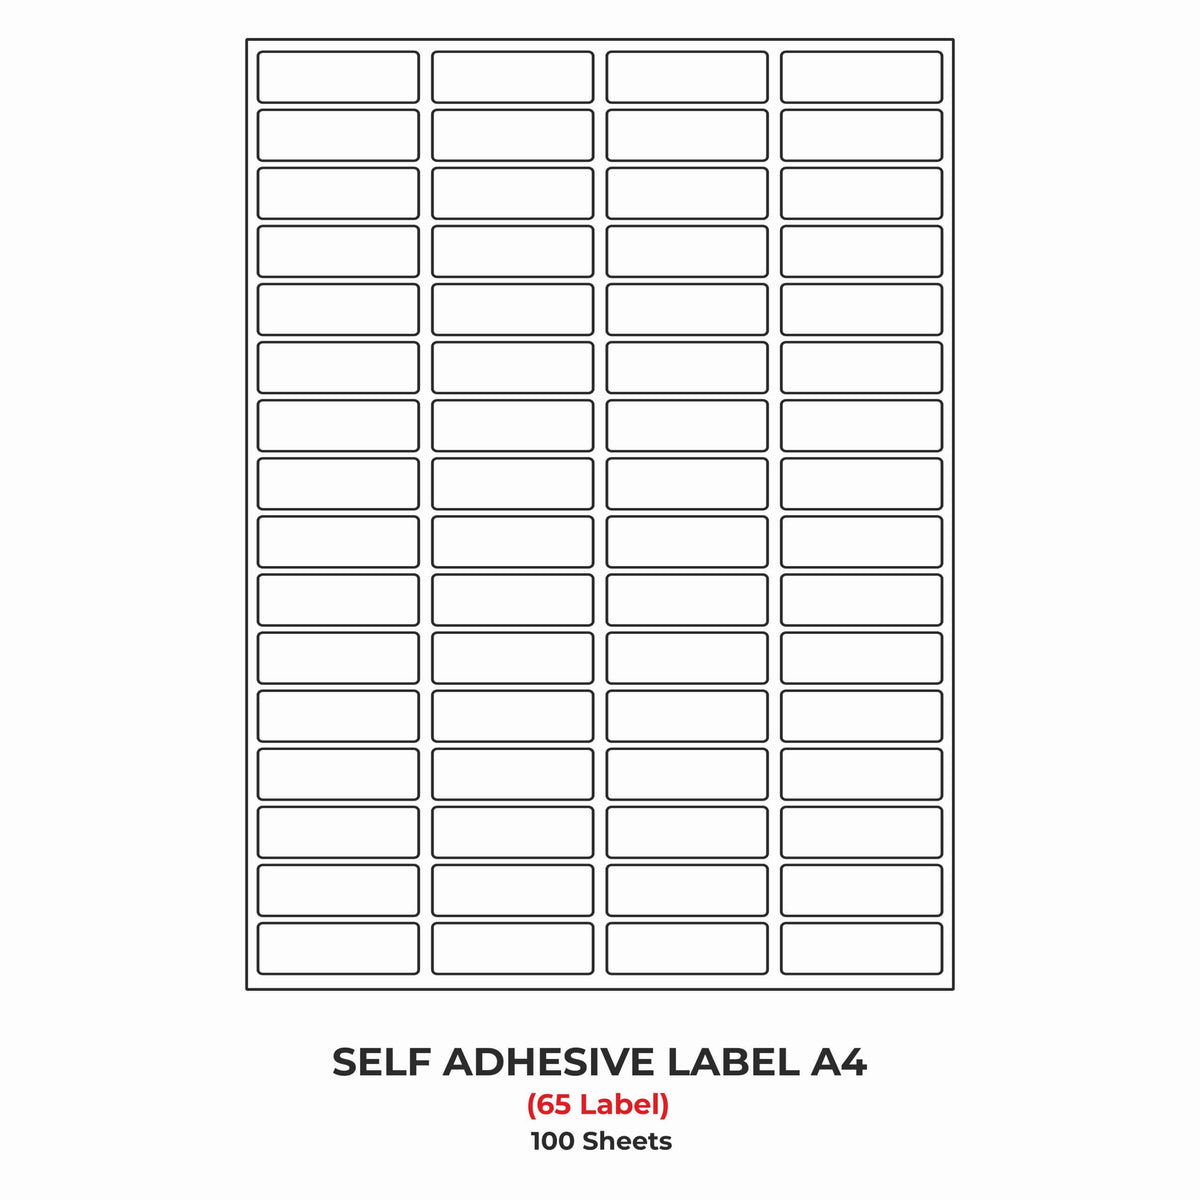 A4 (ST65) Address Label (38mm x 21mm x 65) (Self Adhesive Label for Inkjet/Copier/Laser Printer)